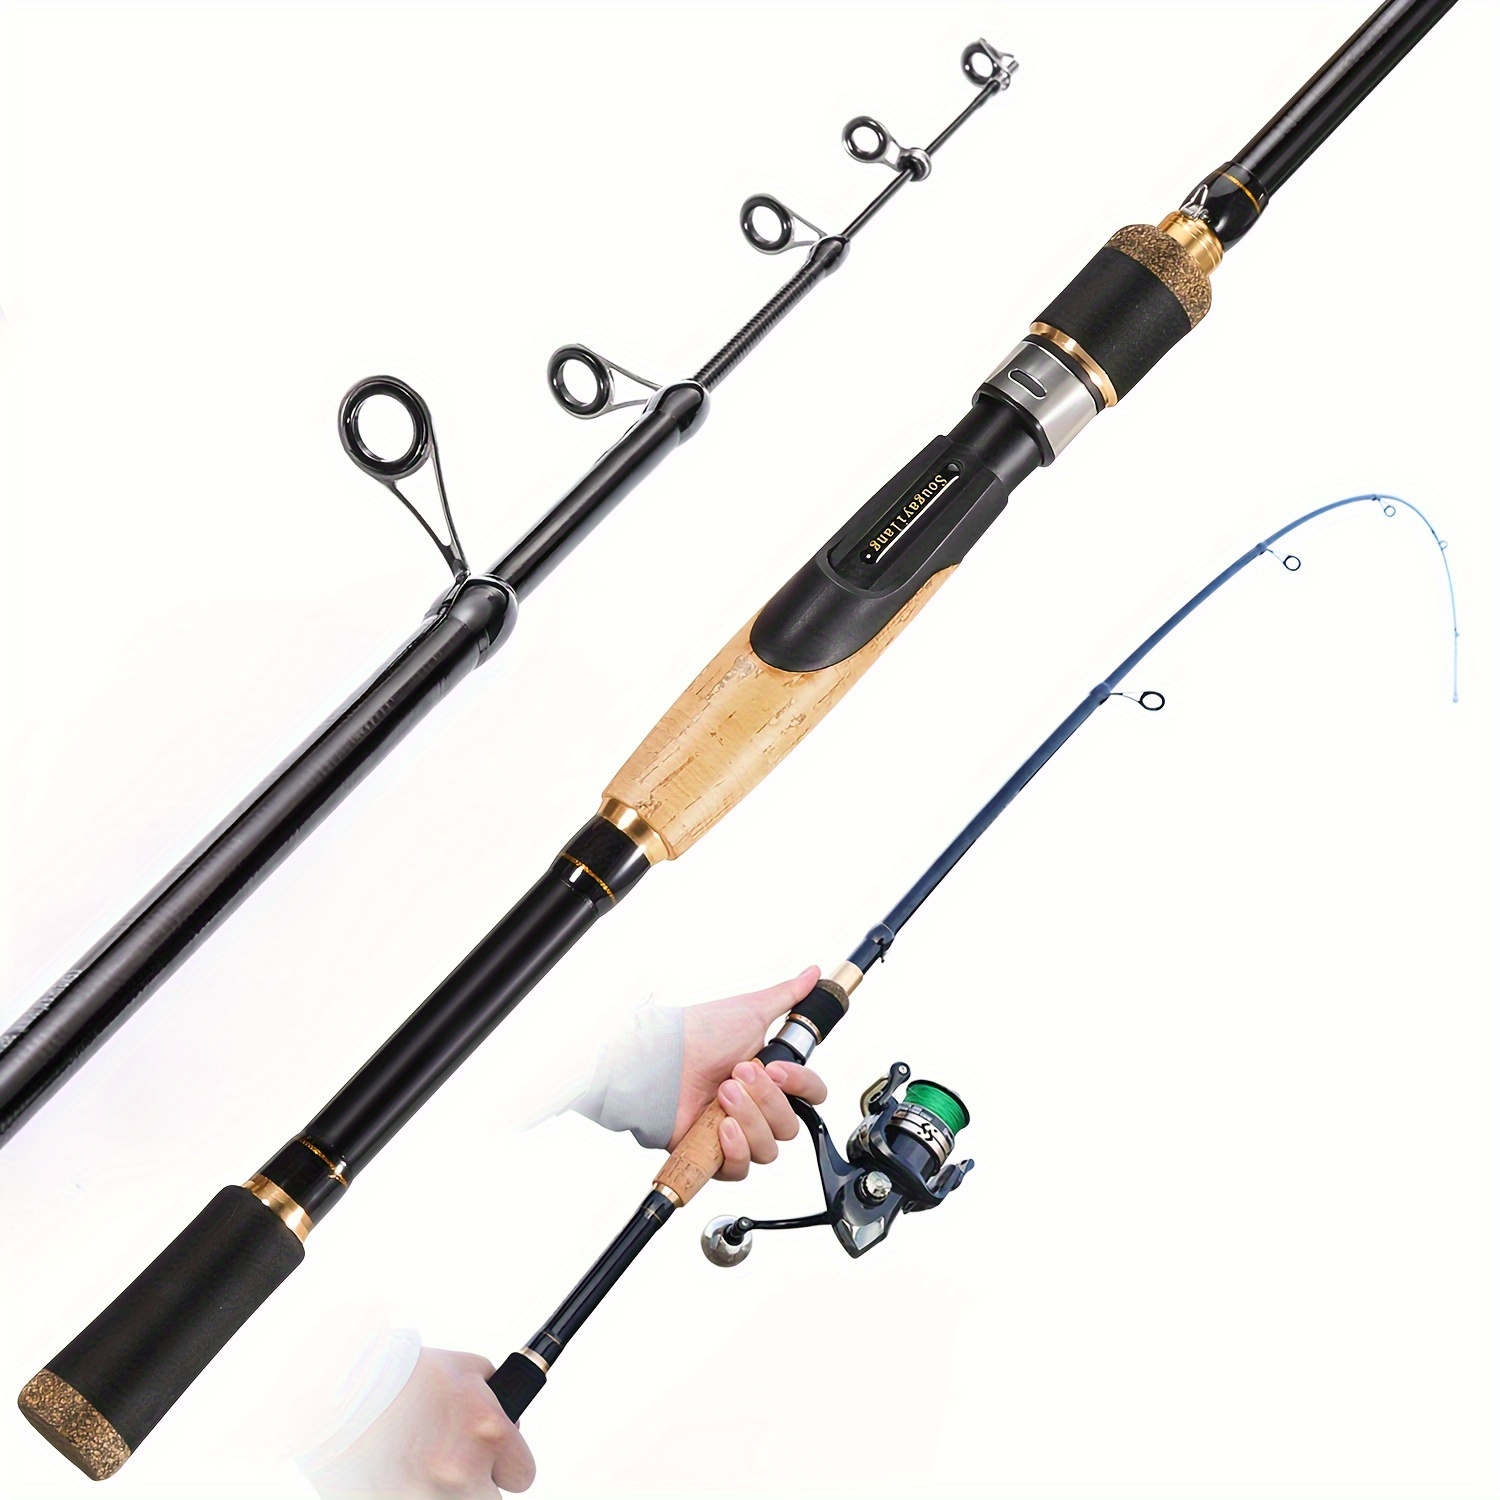 Sougayilang 1.6m Telescopic Fishing Rod Casting Fishing Pole